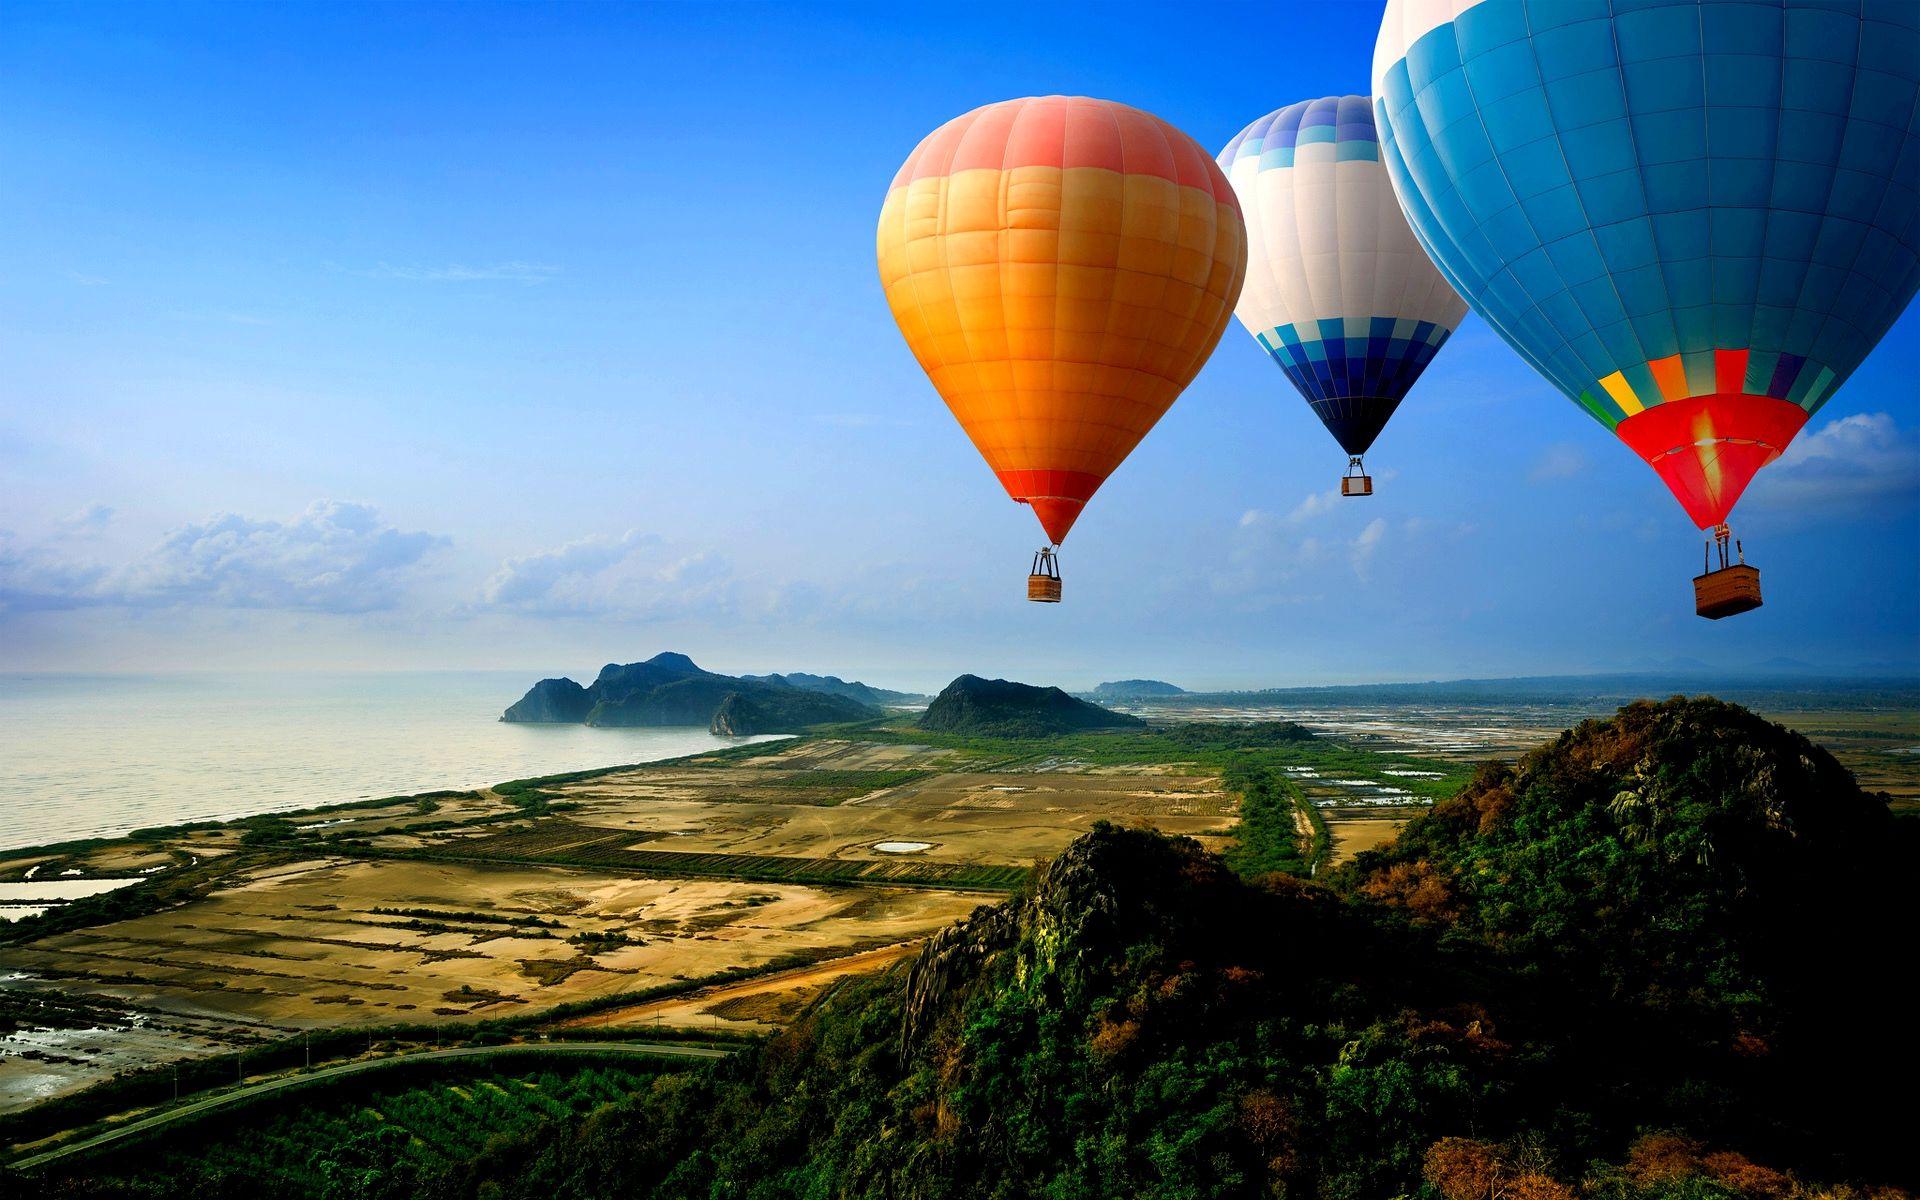 HD Hot Air Balloons Wallpaper. Download Free. Air balloon rides, Hot air balloon rides, Balloon rides